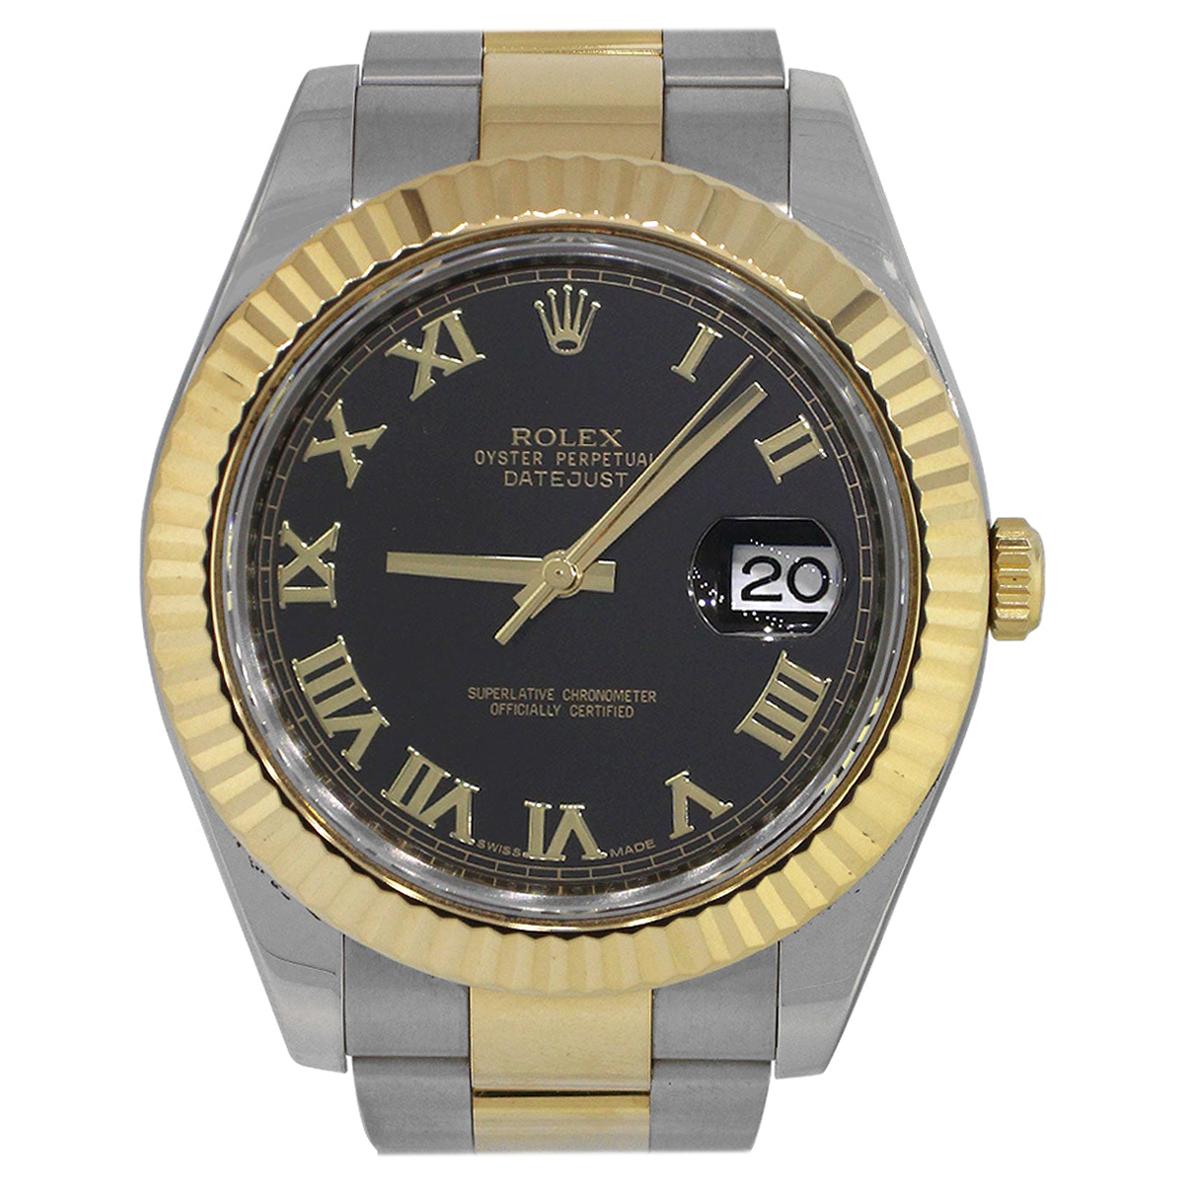 Rolex 116333 Datejust II Black Roman Dial Watch